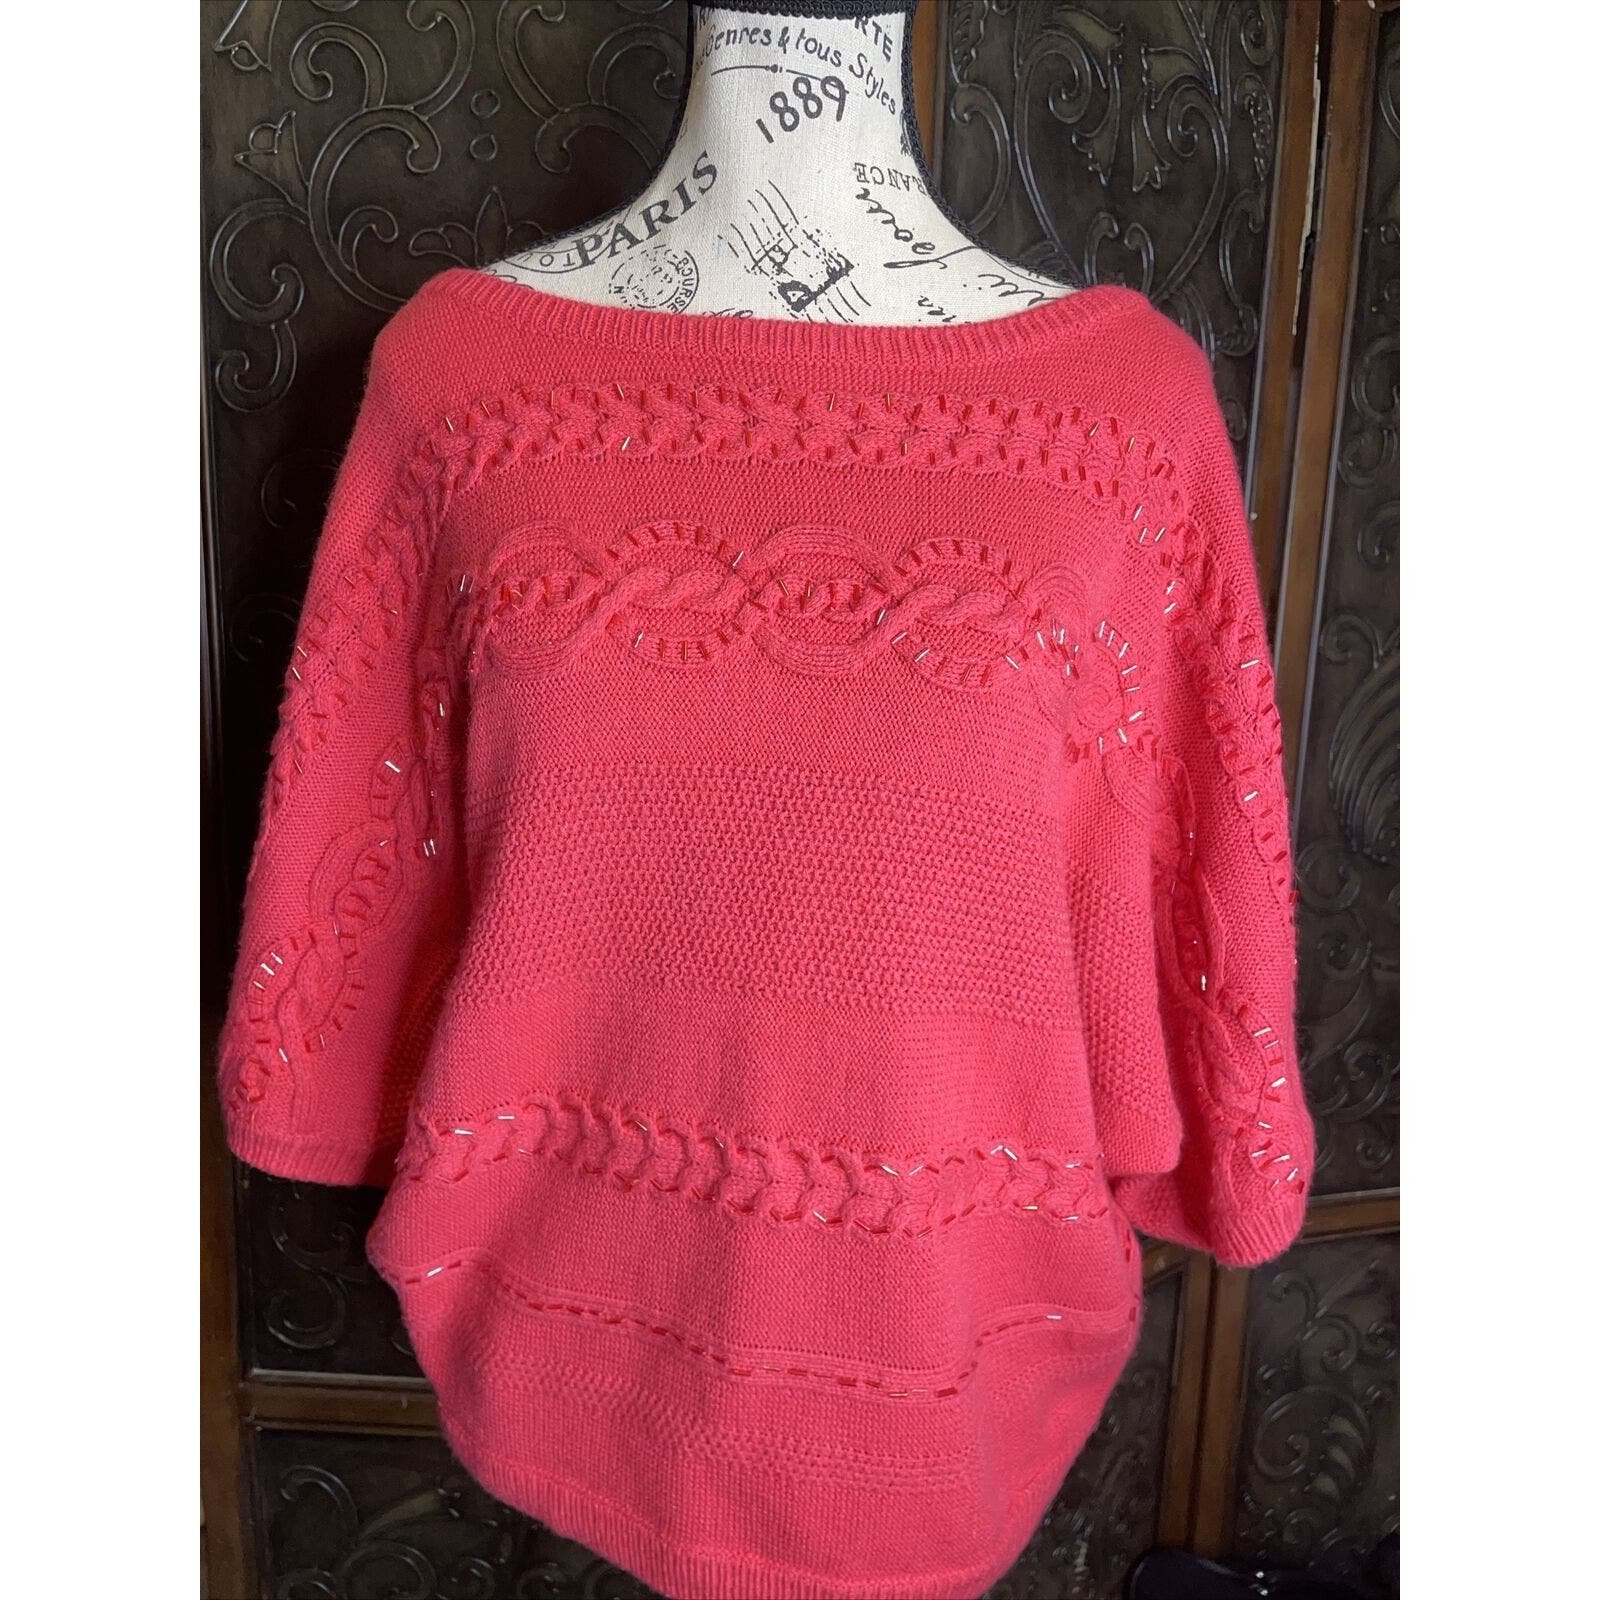 Marc New York Coral Pink Short Sleeve Knit Sweater Women´s Shirt Size 1X Jjd4efS4H